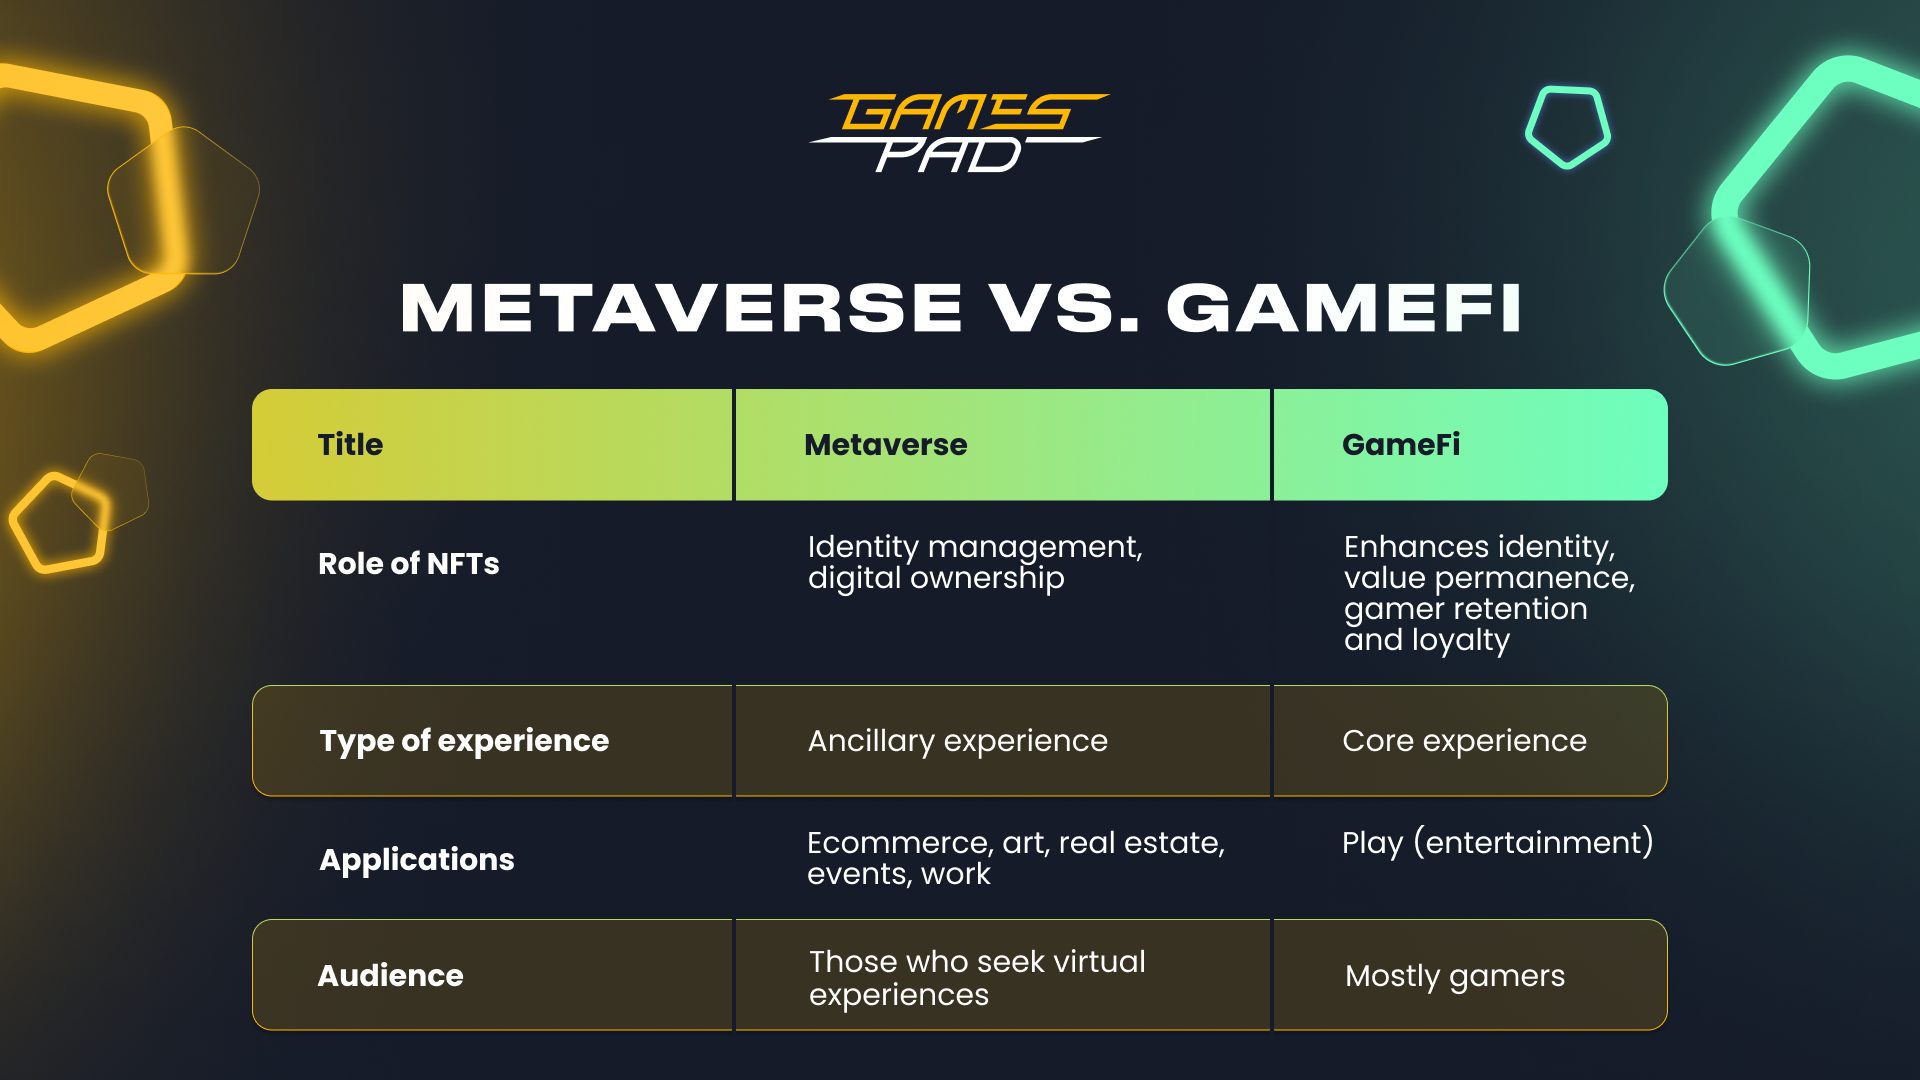 GameFi Vs. Metaverse